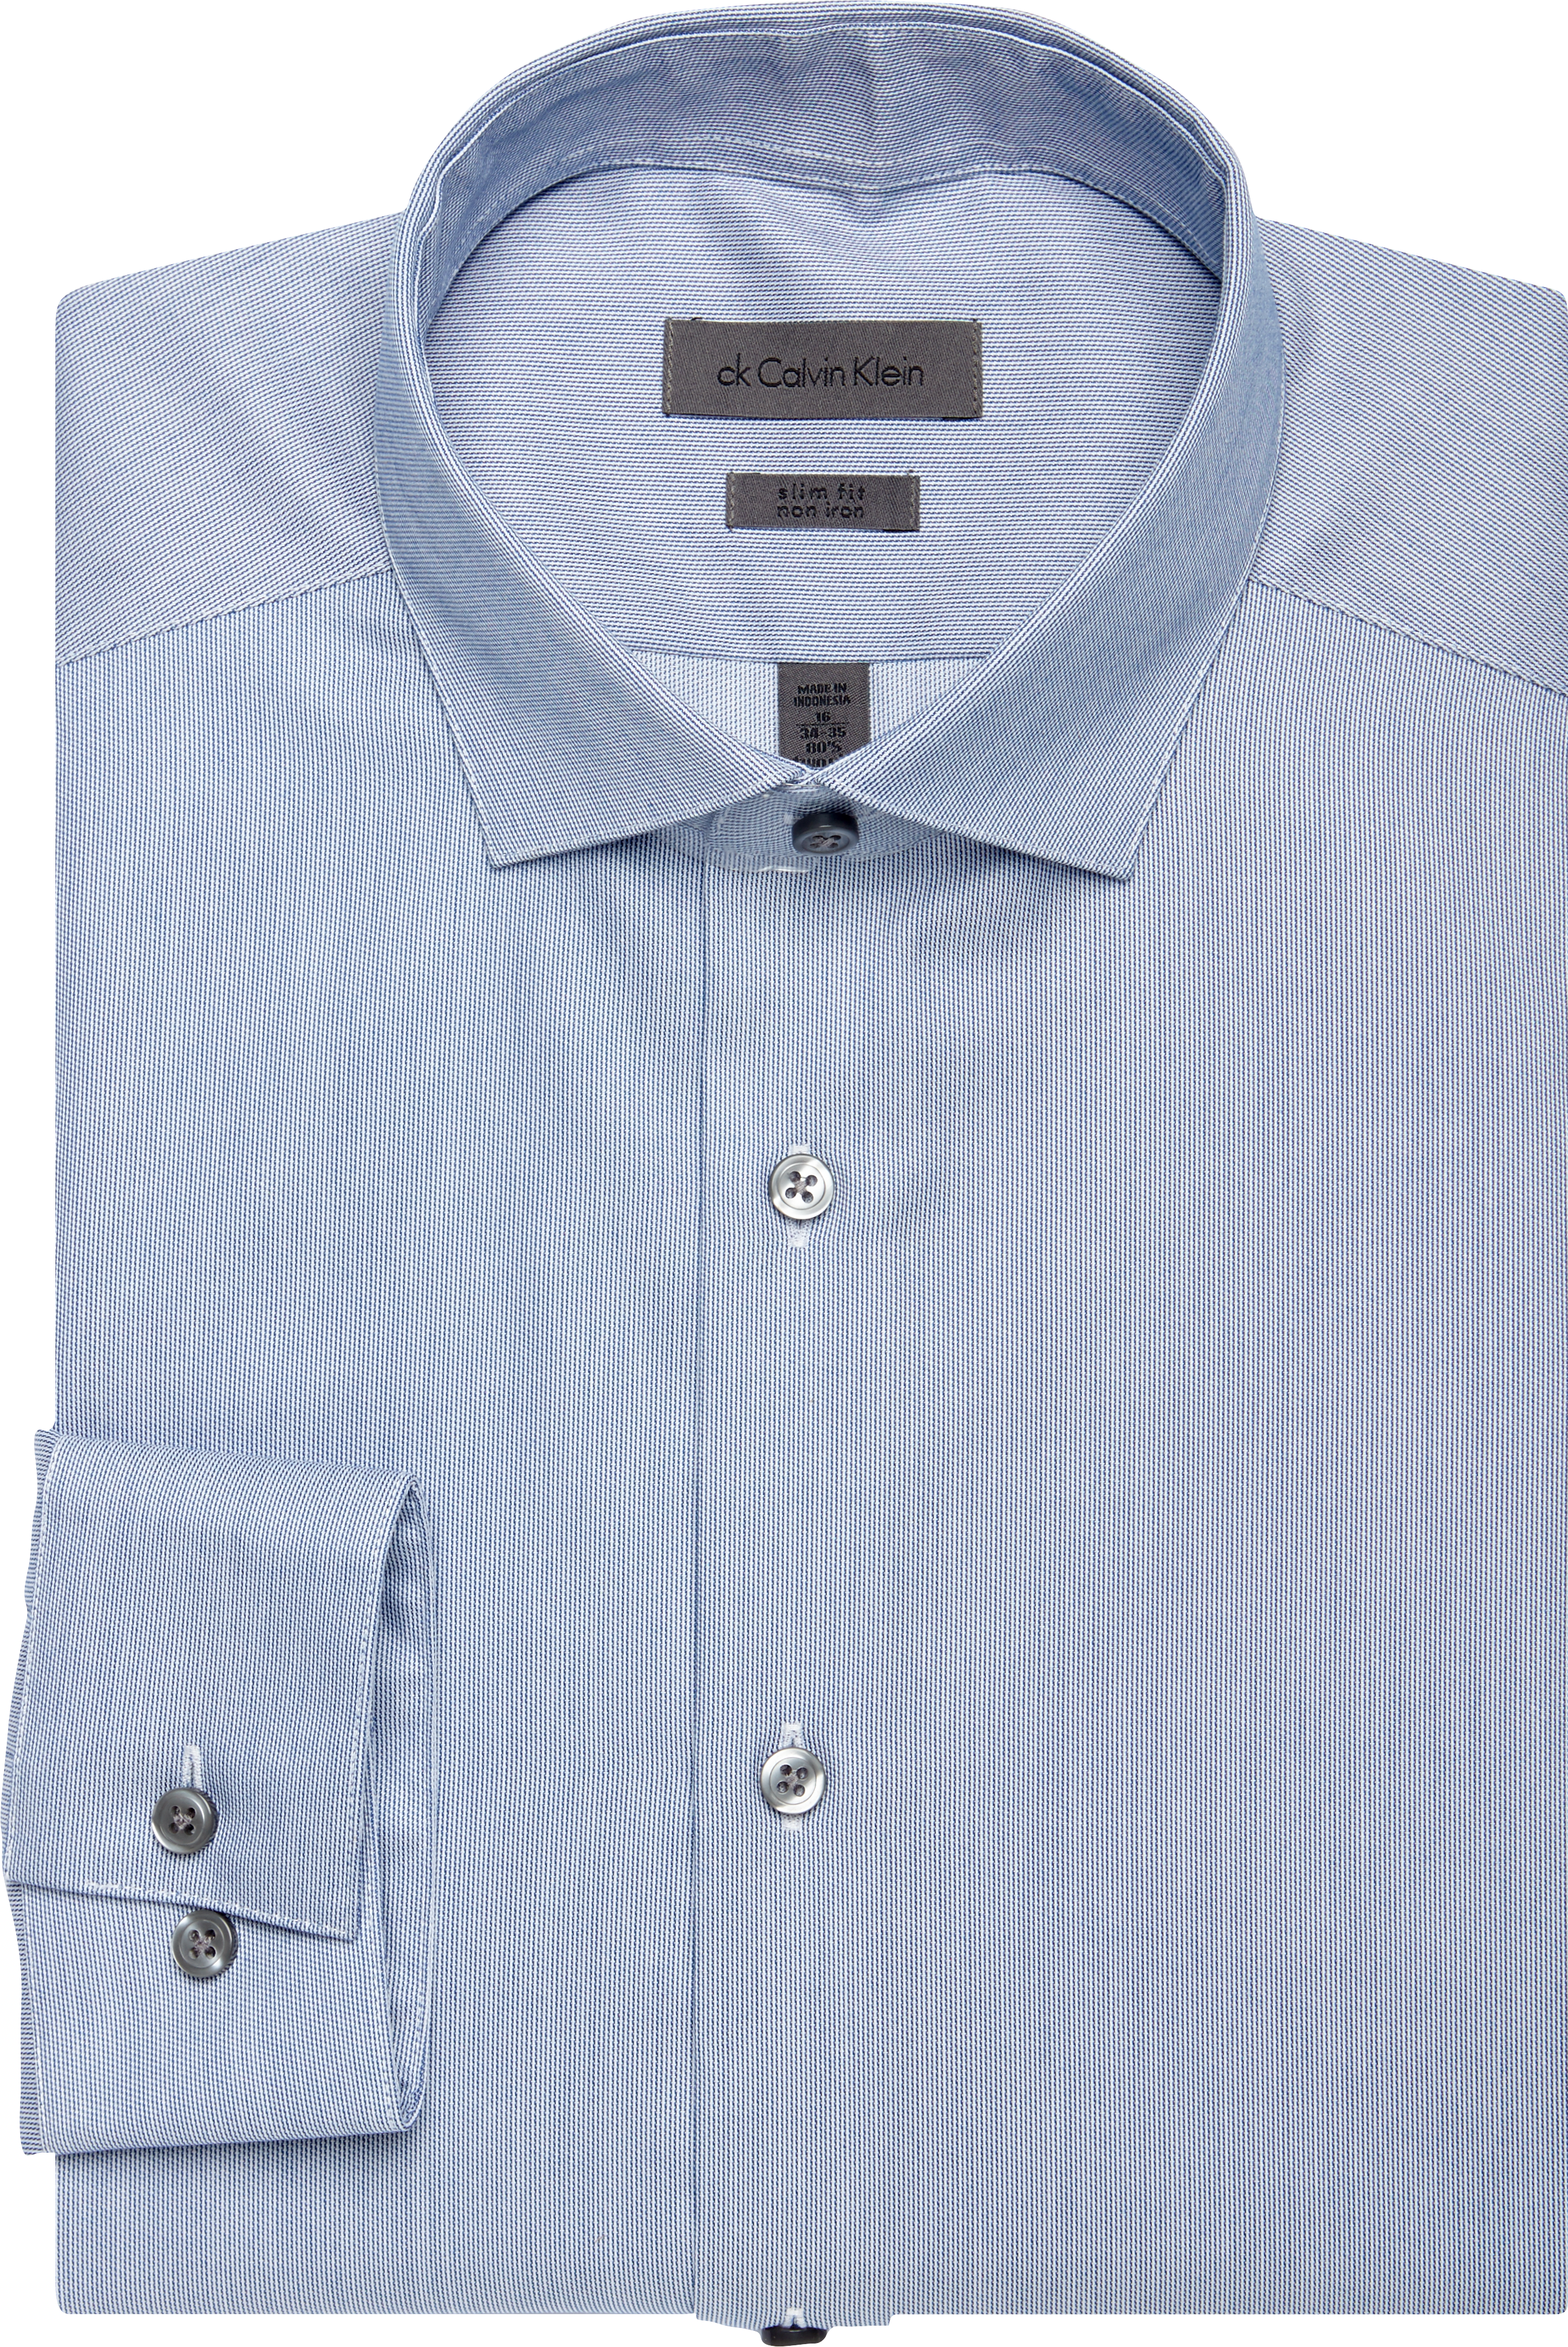 Calvin Klein Blue Textured Slim Fit Dress Shirt - Men's Shirts | Men's ...